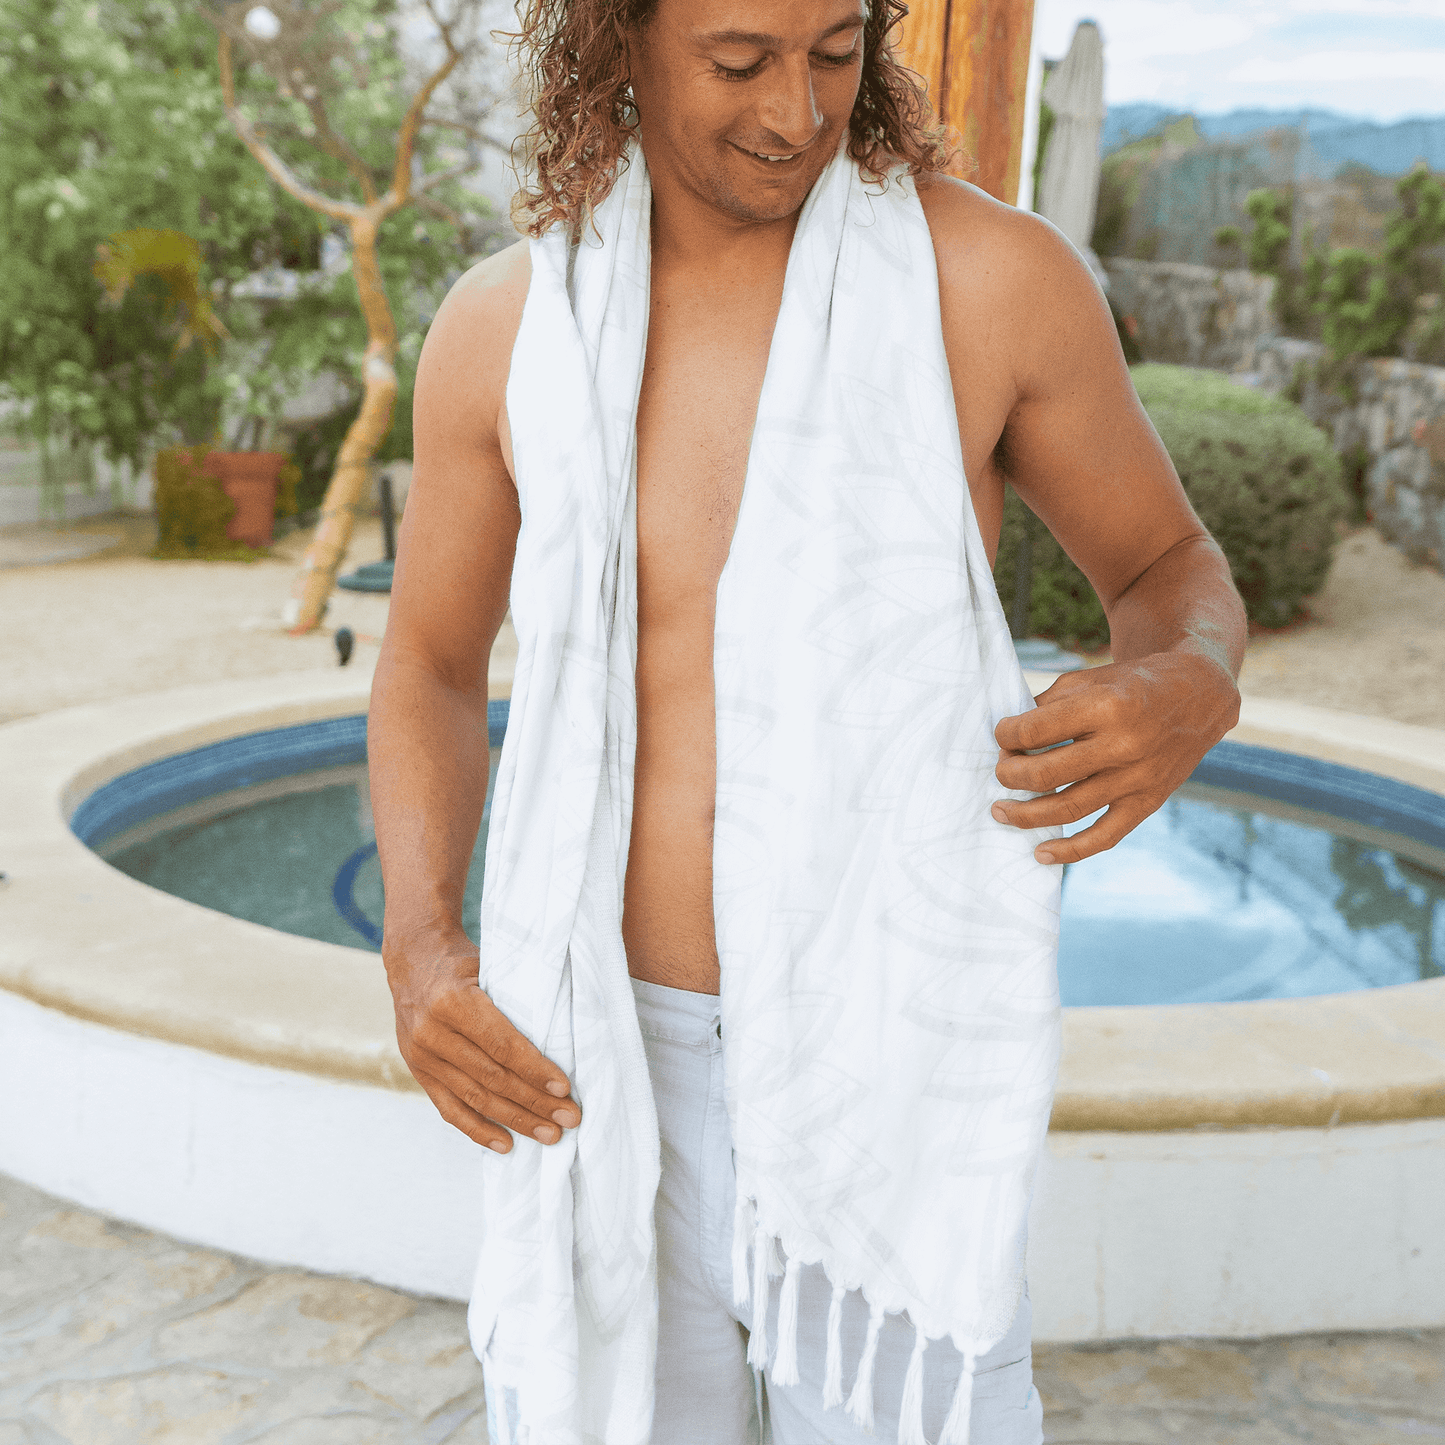 Man at a resort using a Turkish towel